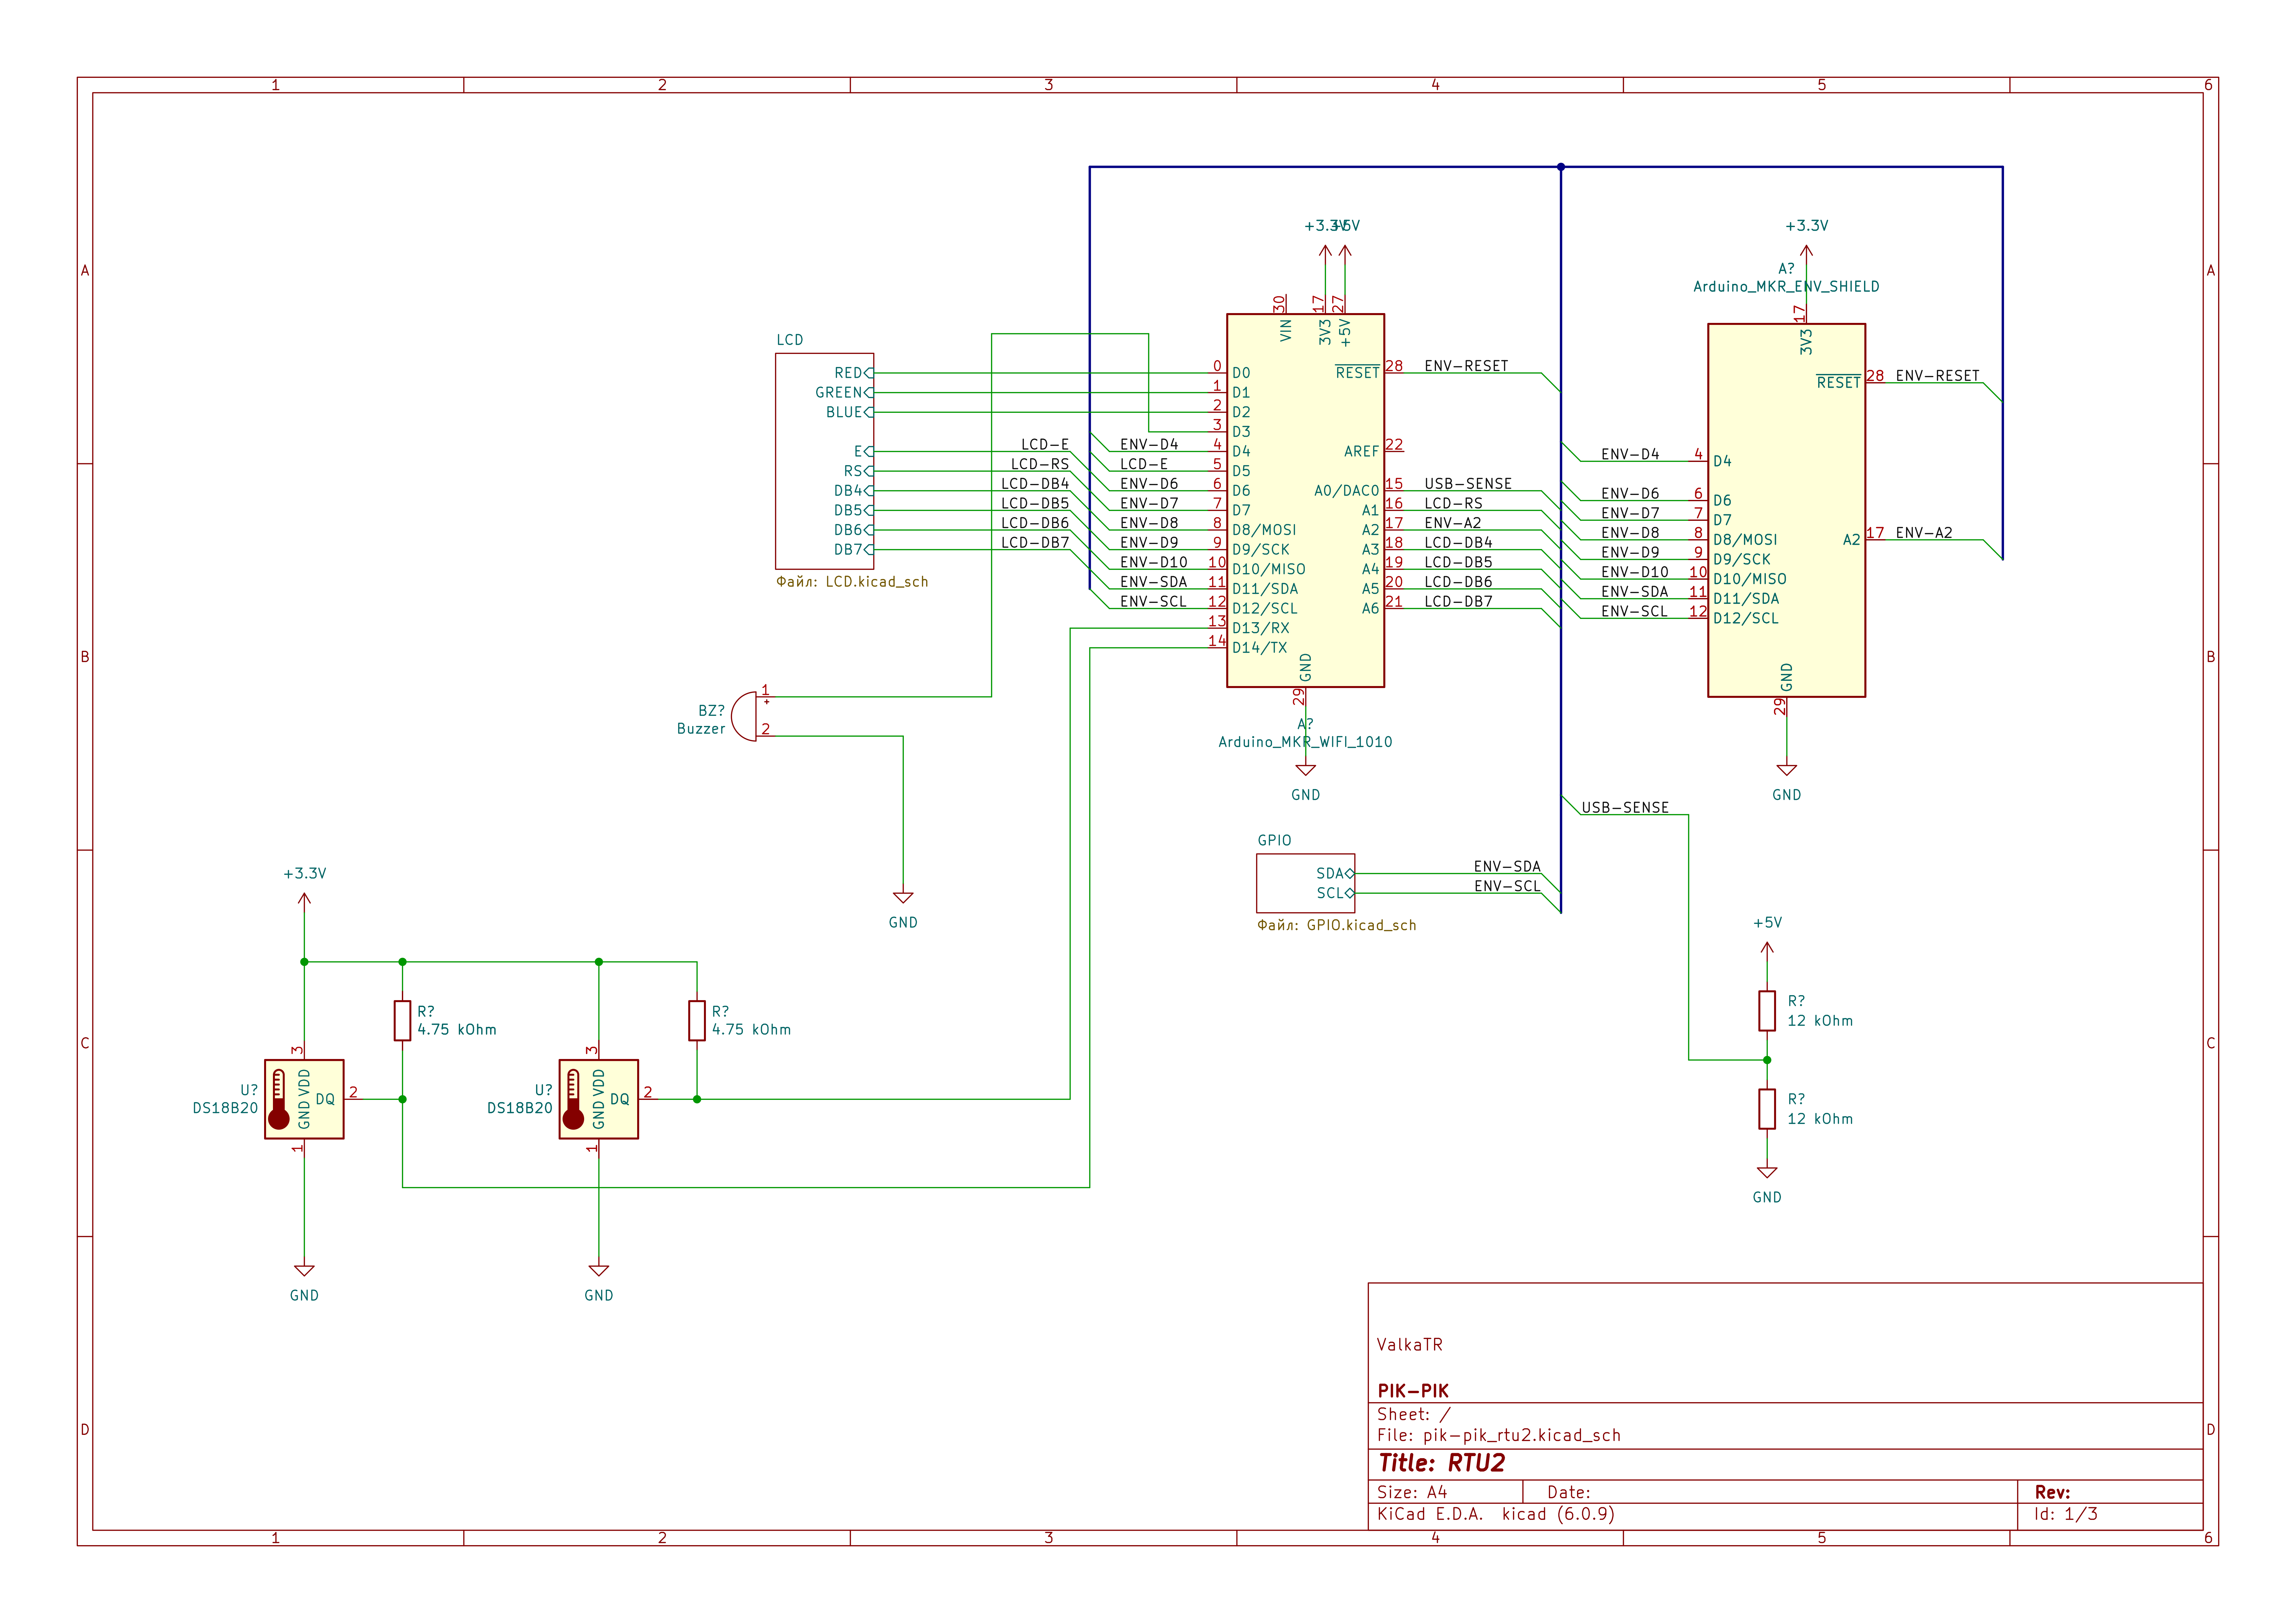 PIK-PIK RTU2 - Main Wiring Diagram